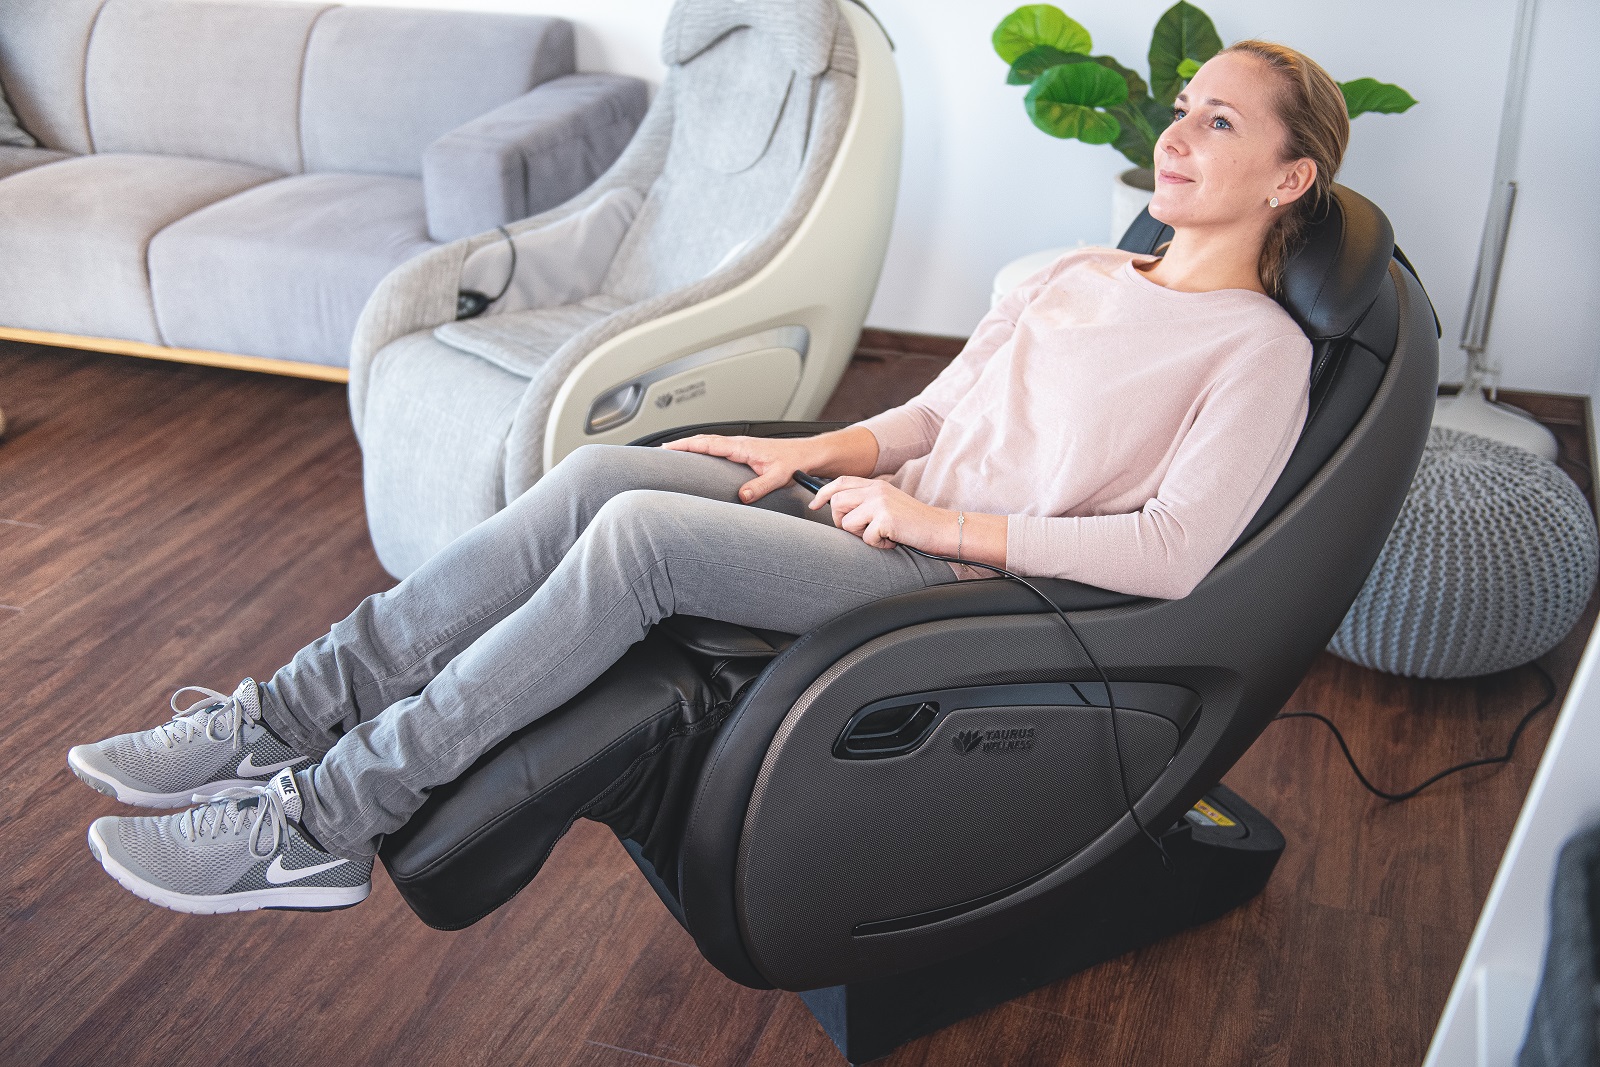 Taurus Wellness Massage Chair Medium